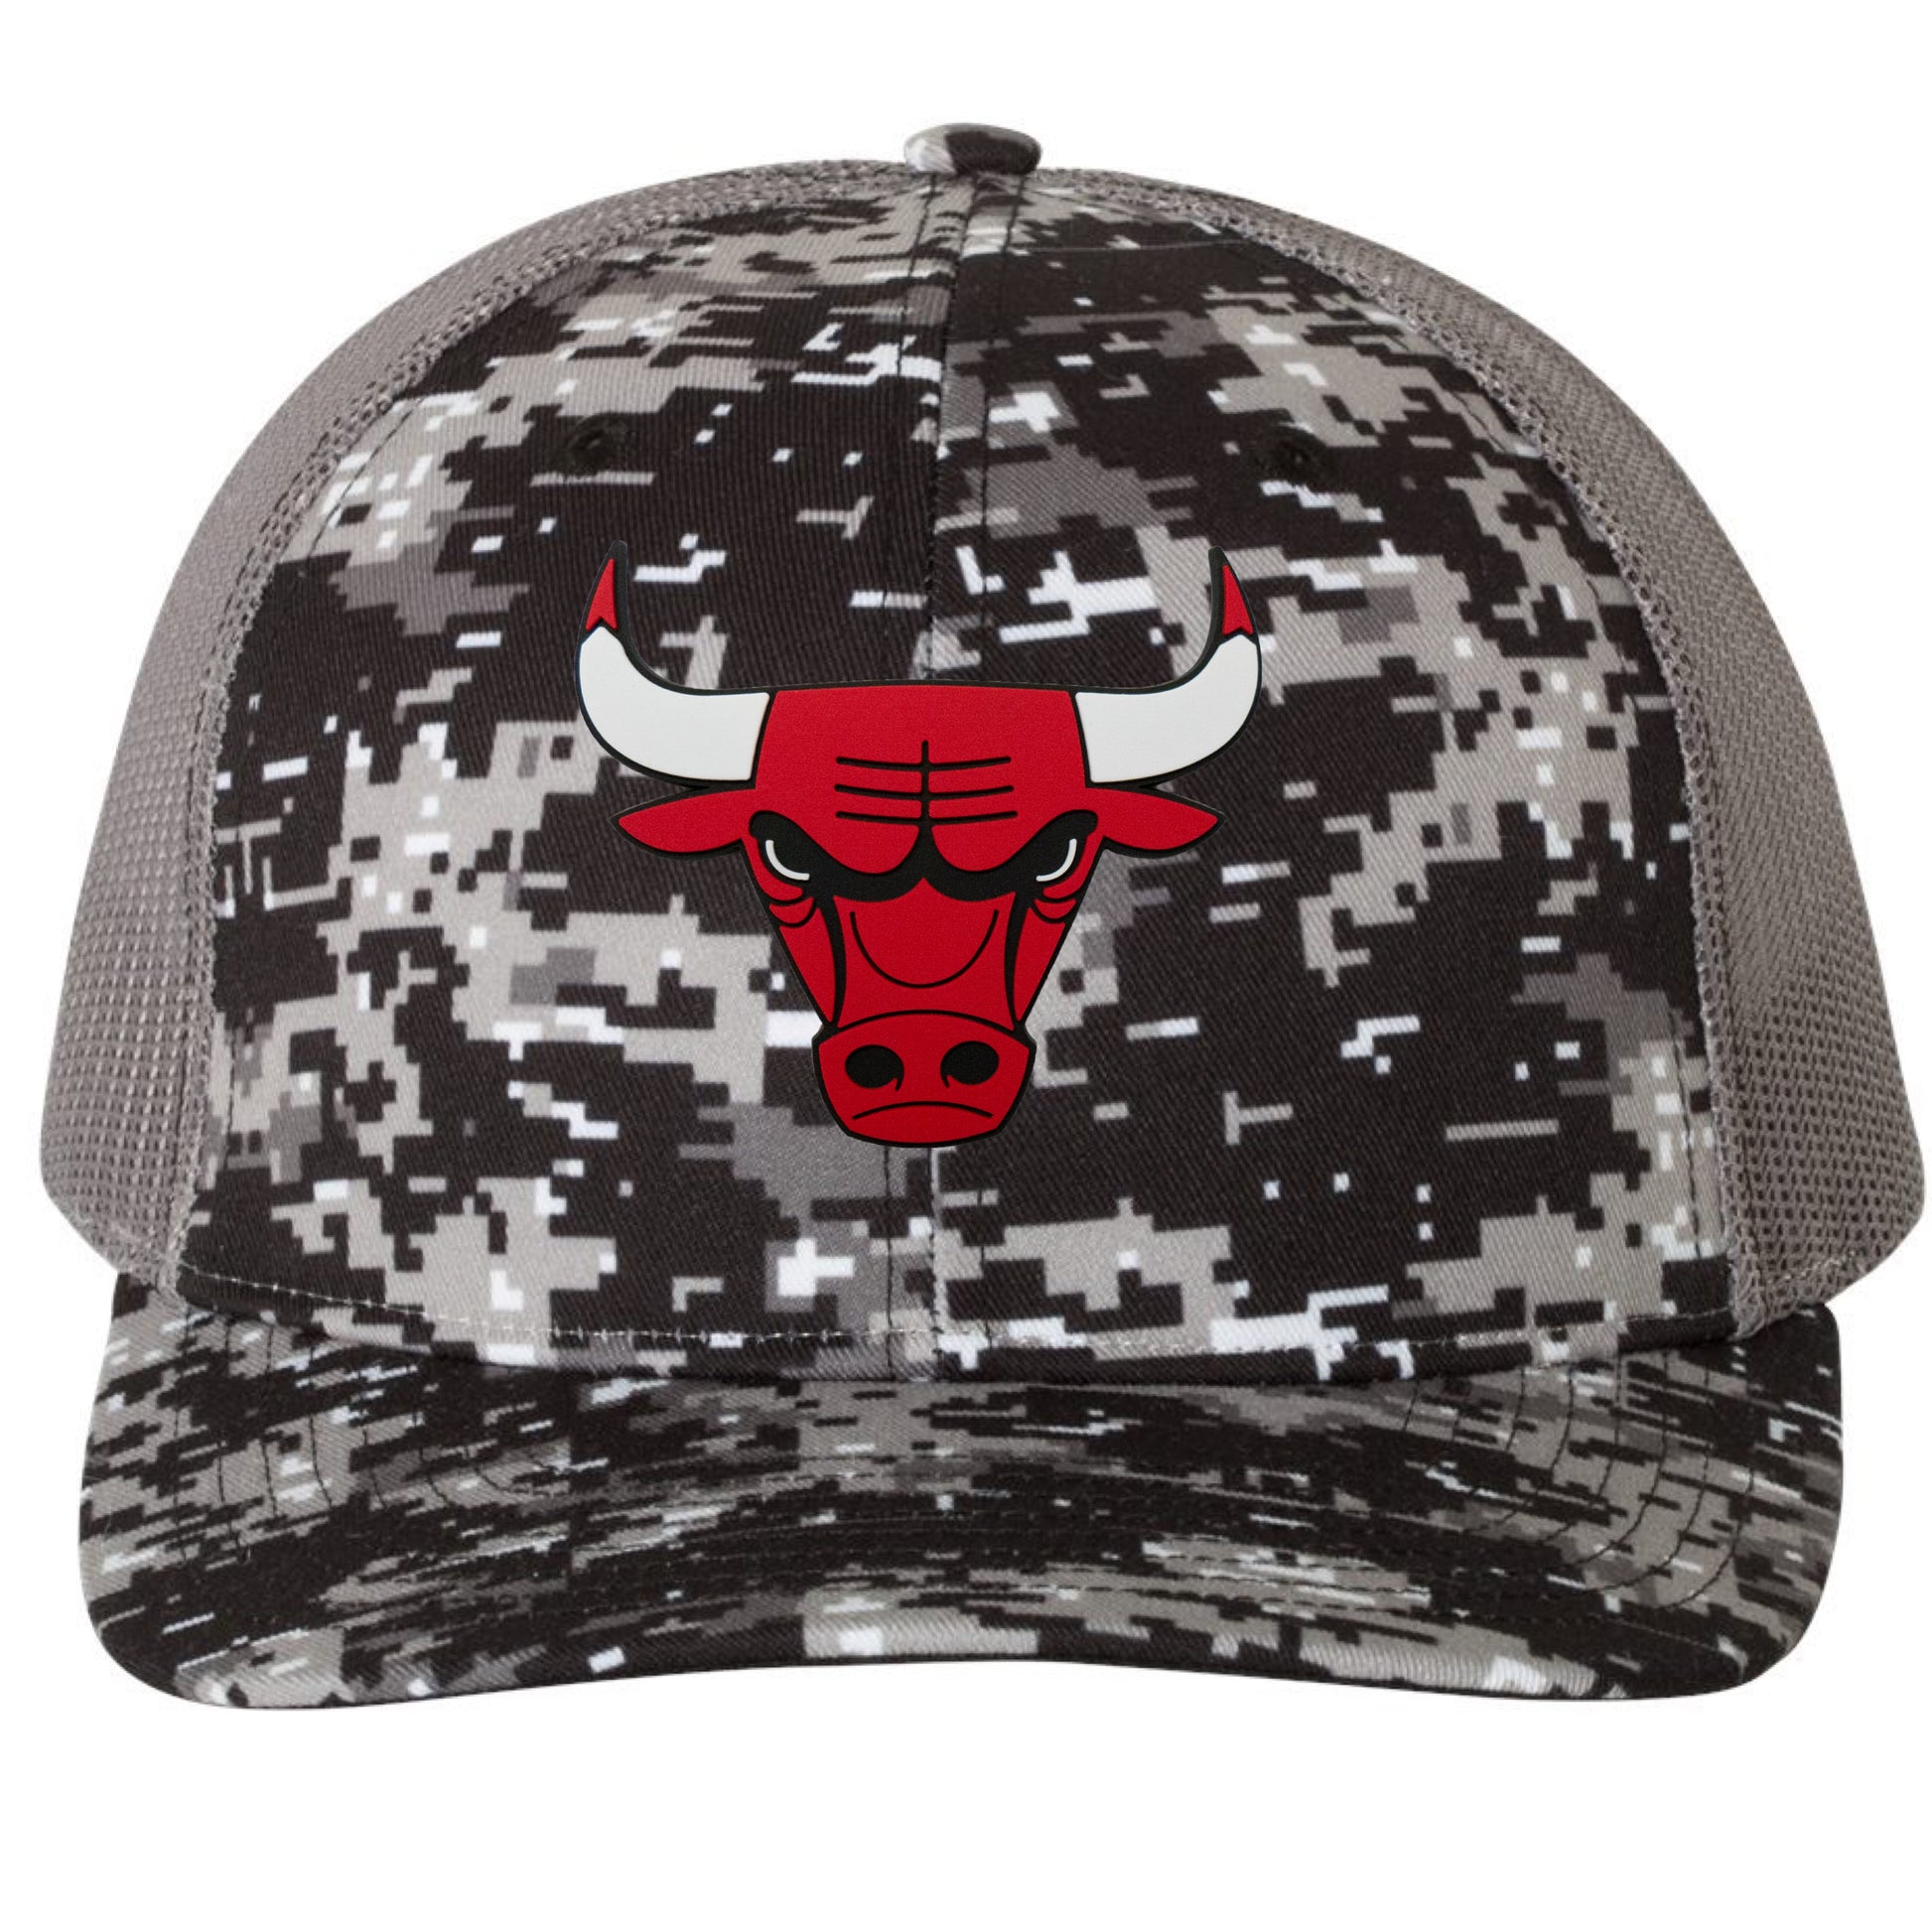 Chicago Bulls 3D Patterned Snapback Trucker Hat- Black Digital Camo - Ten Gallon Hat Co.